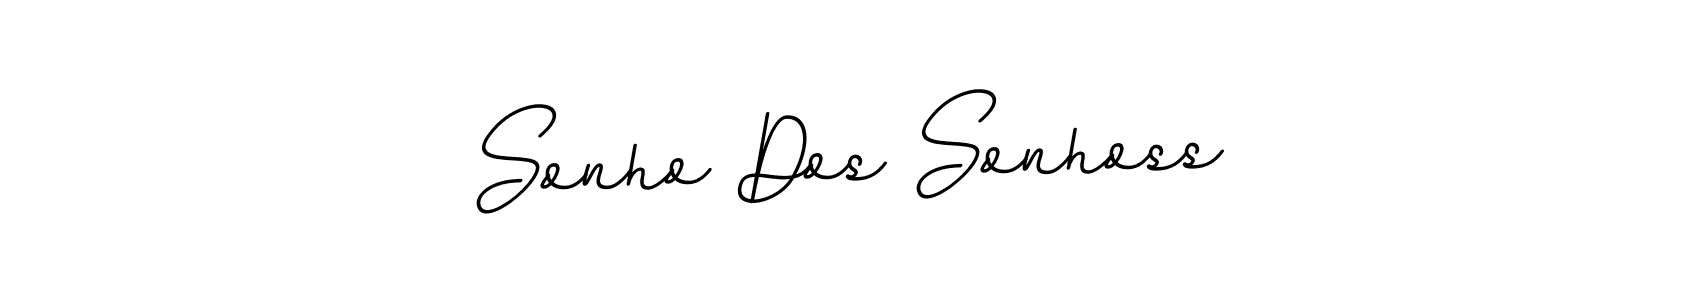 How to Draw Sonho Dos Sonhoss signature style? BallpointsItalic-DORy9 is a latest design signature styles for name Sonho Dos Sonhoss. Sonho Dos Sonhoss signature style 11 images and pictures png